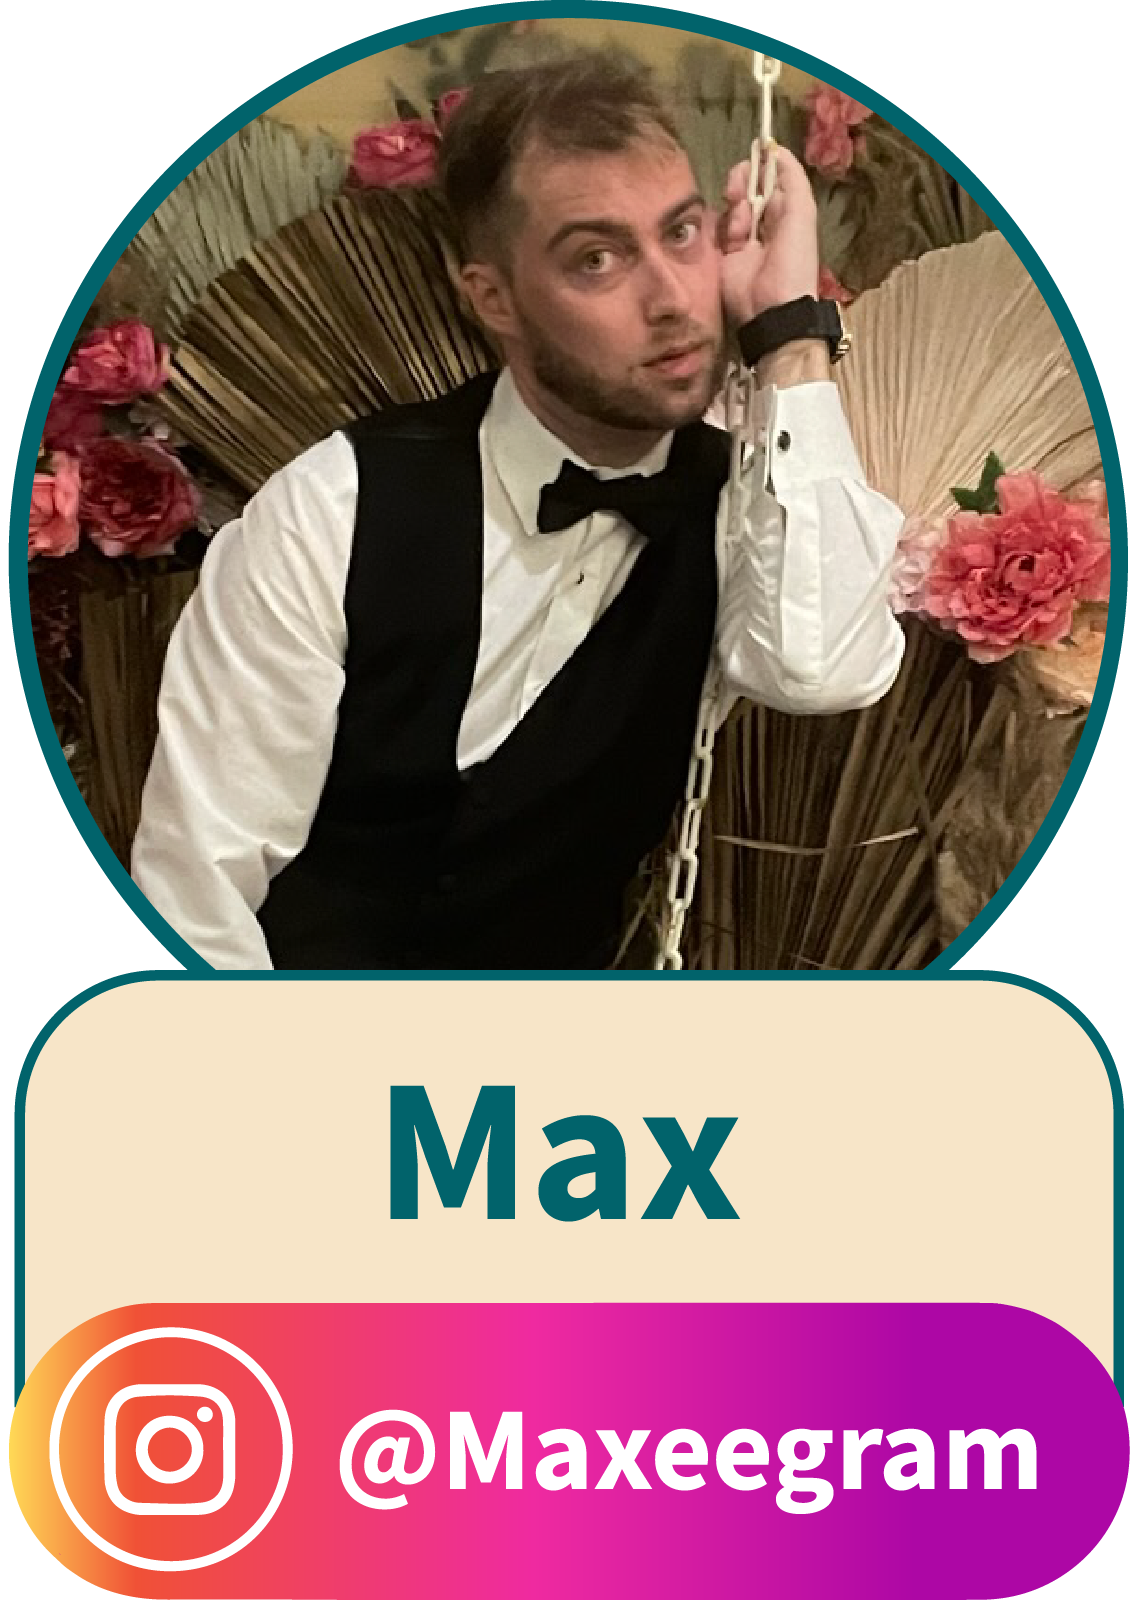 Max image